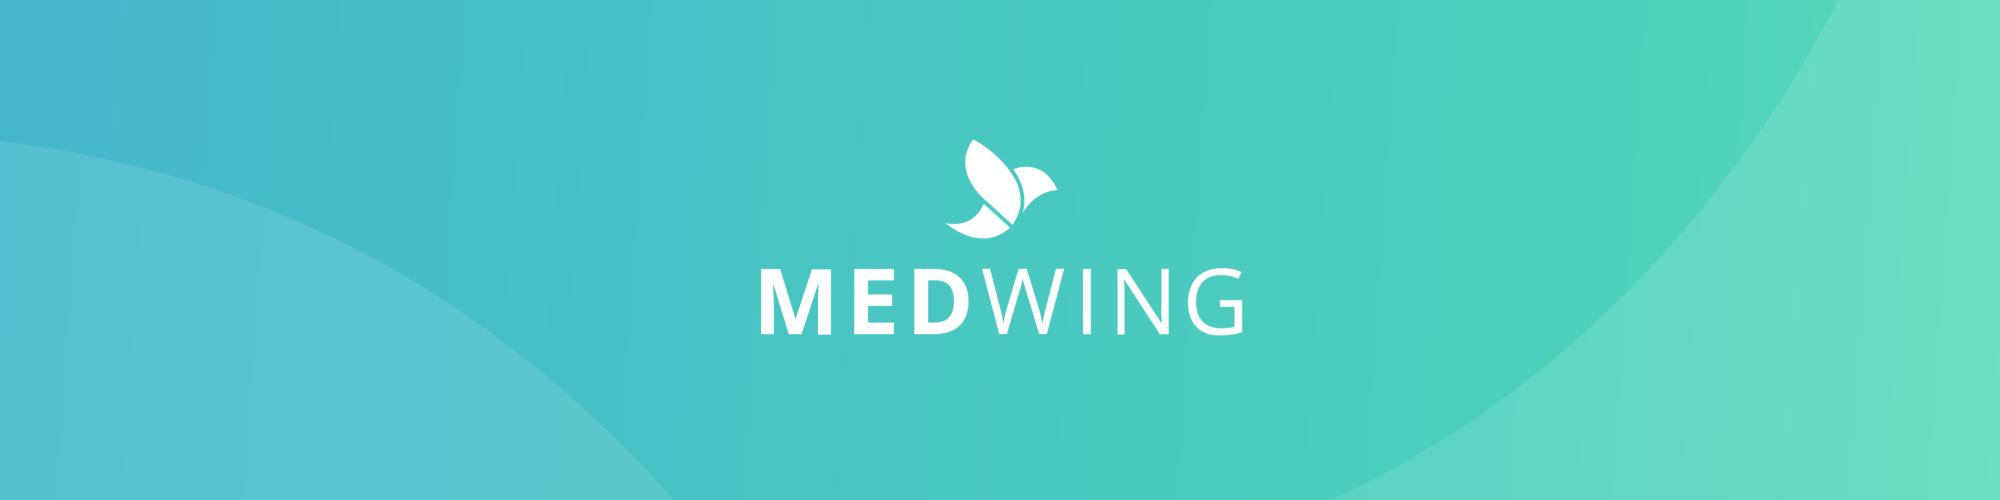 MEDWING GmbH